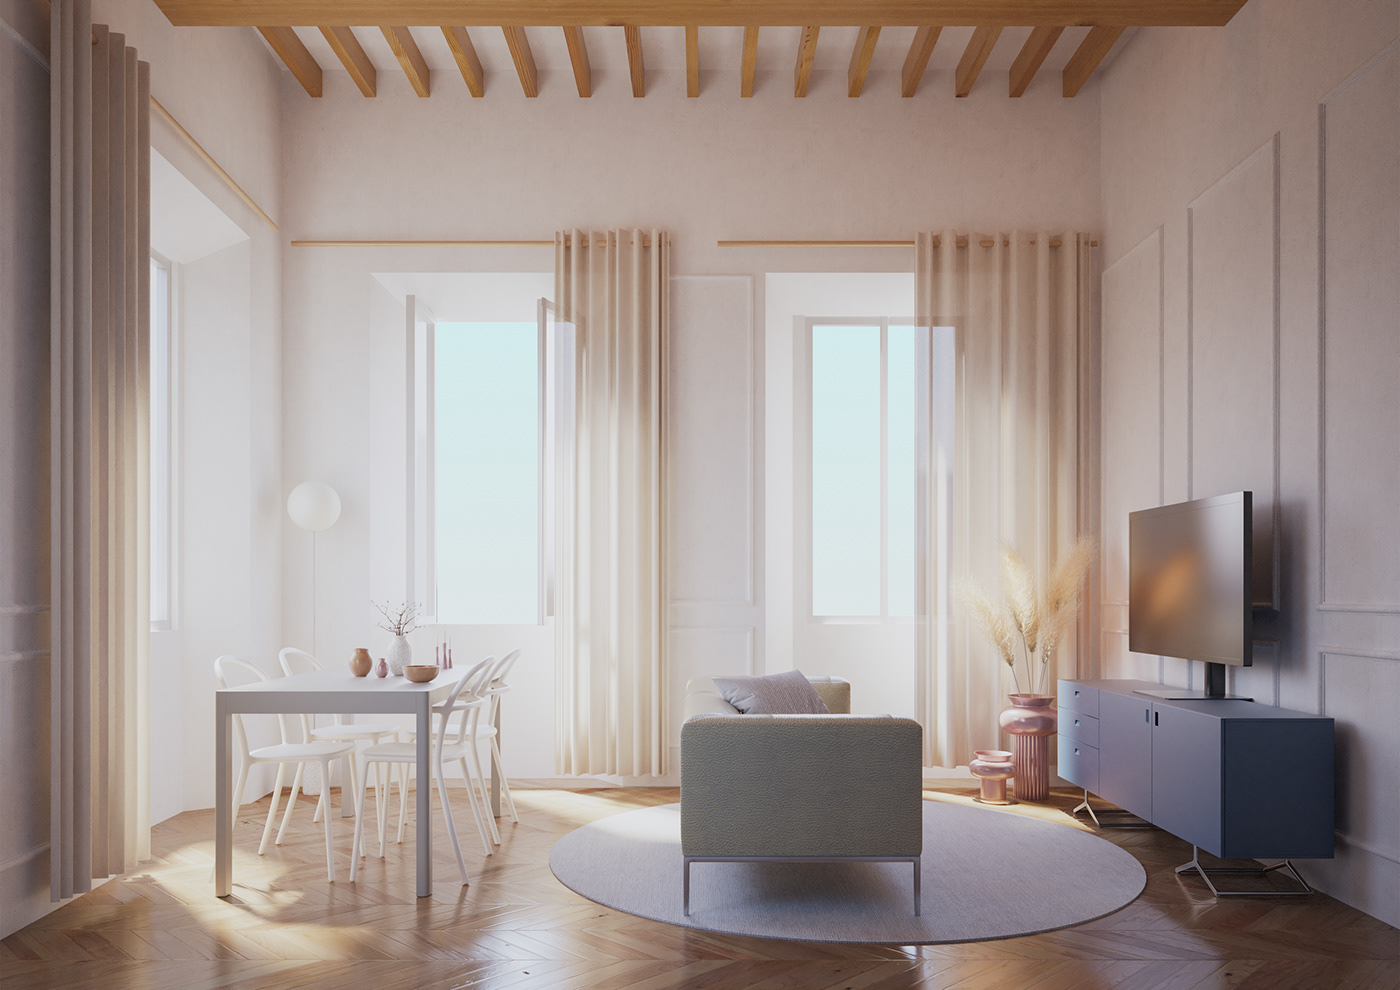 indoor architecture visualization archviz interior design  corona Render 3ds max CGI visualizations